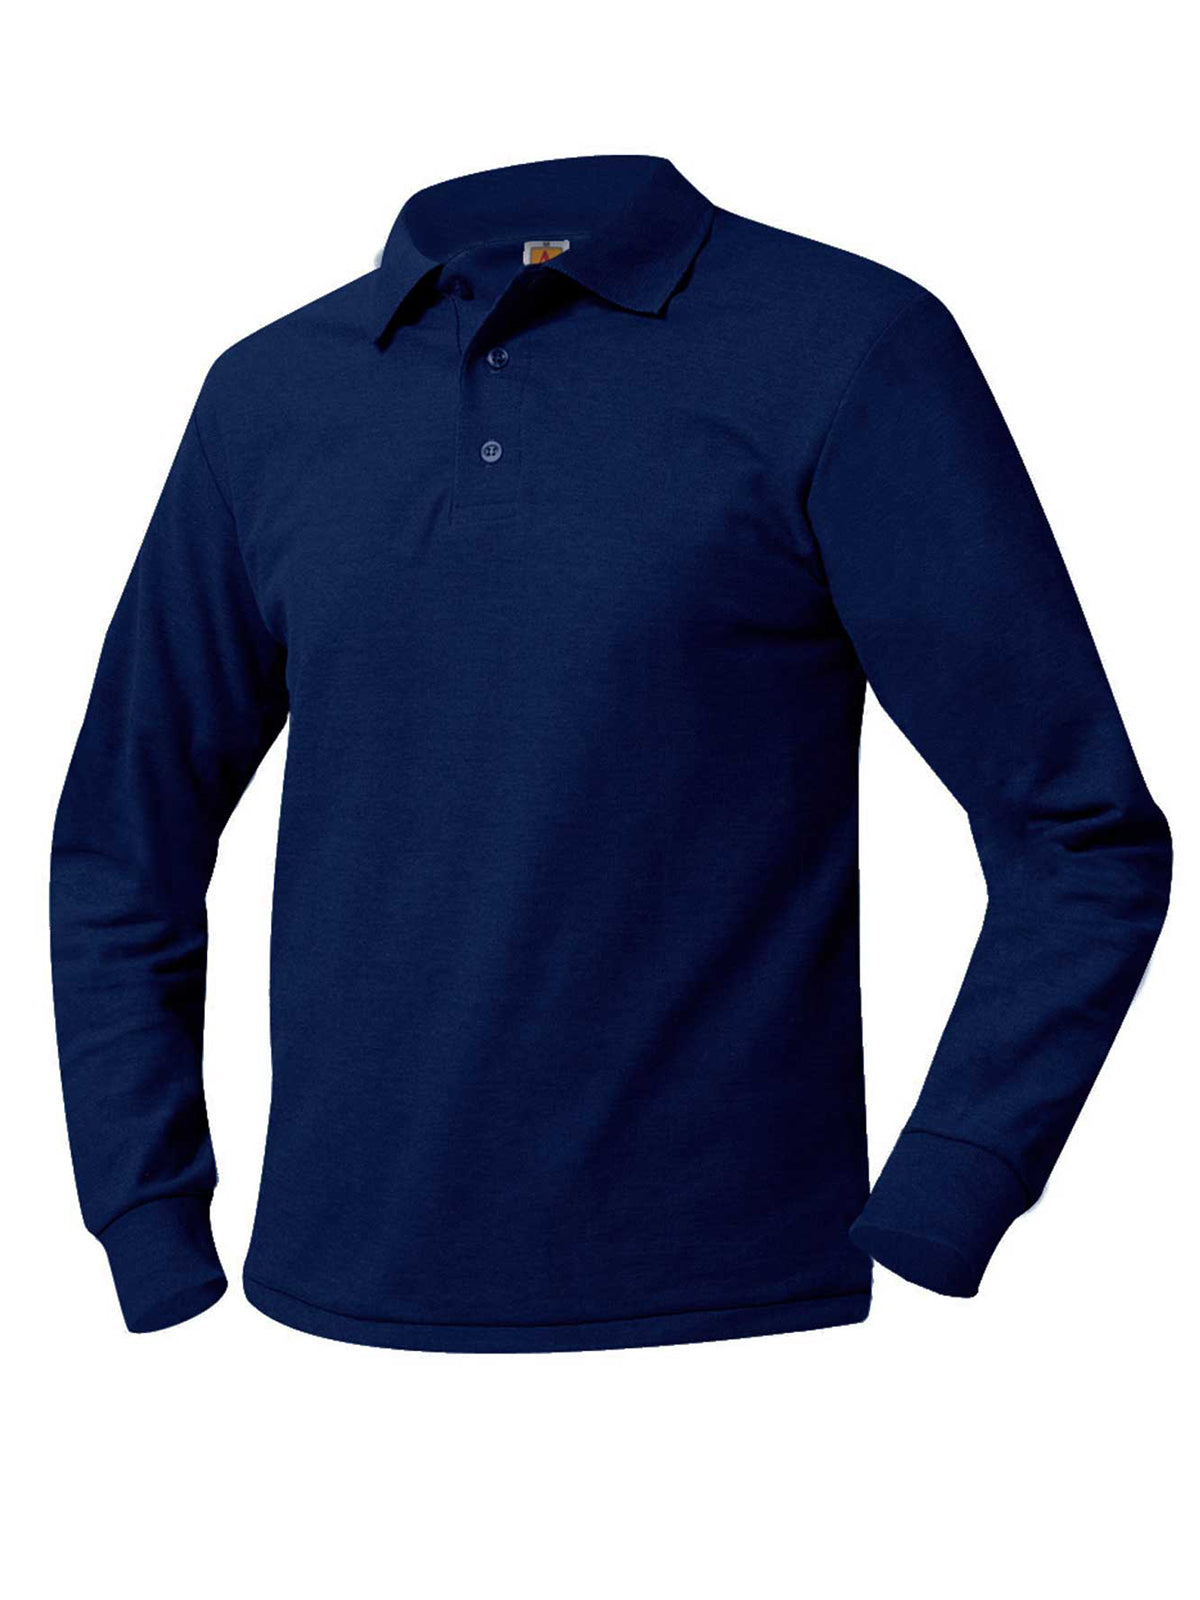 Unisex Long Sleeve Knit Shirt - 8766 - Bright Navy